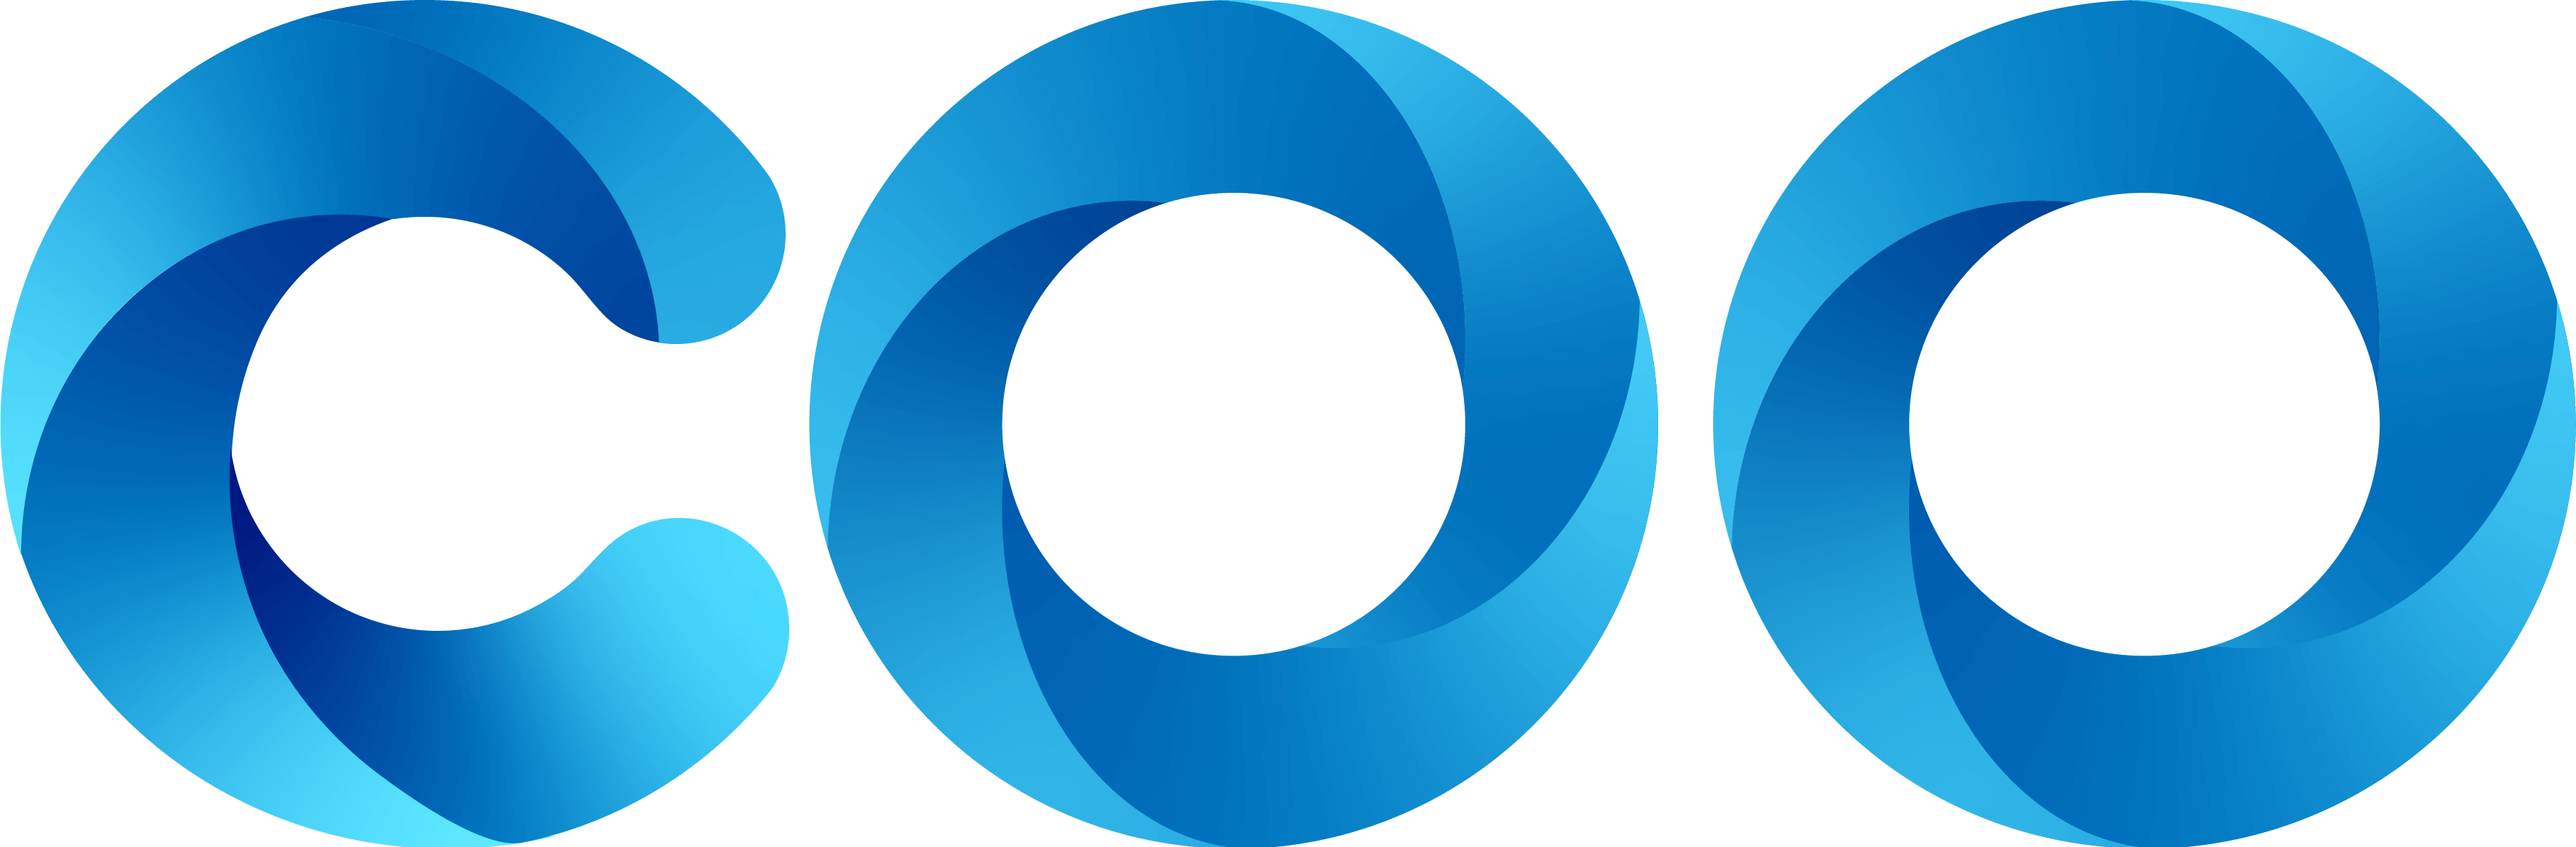 coo digital logo